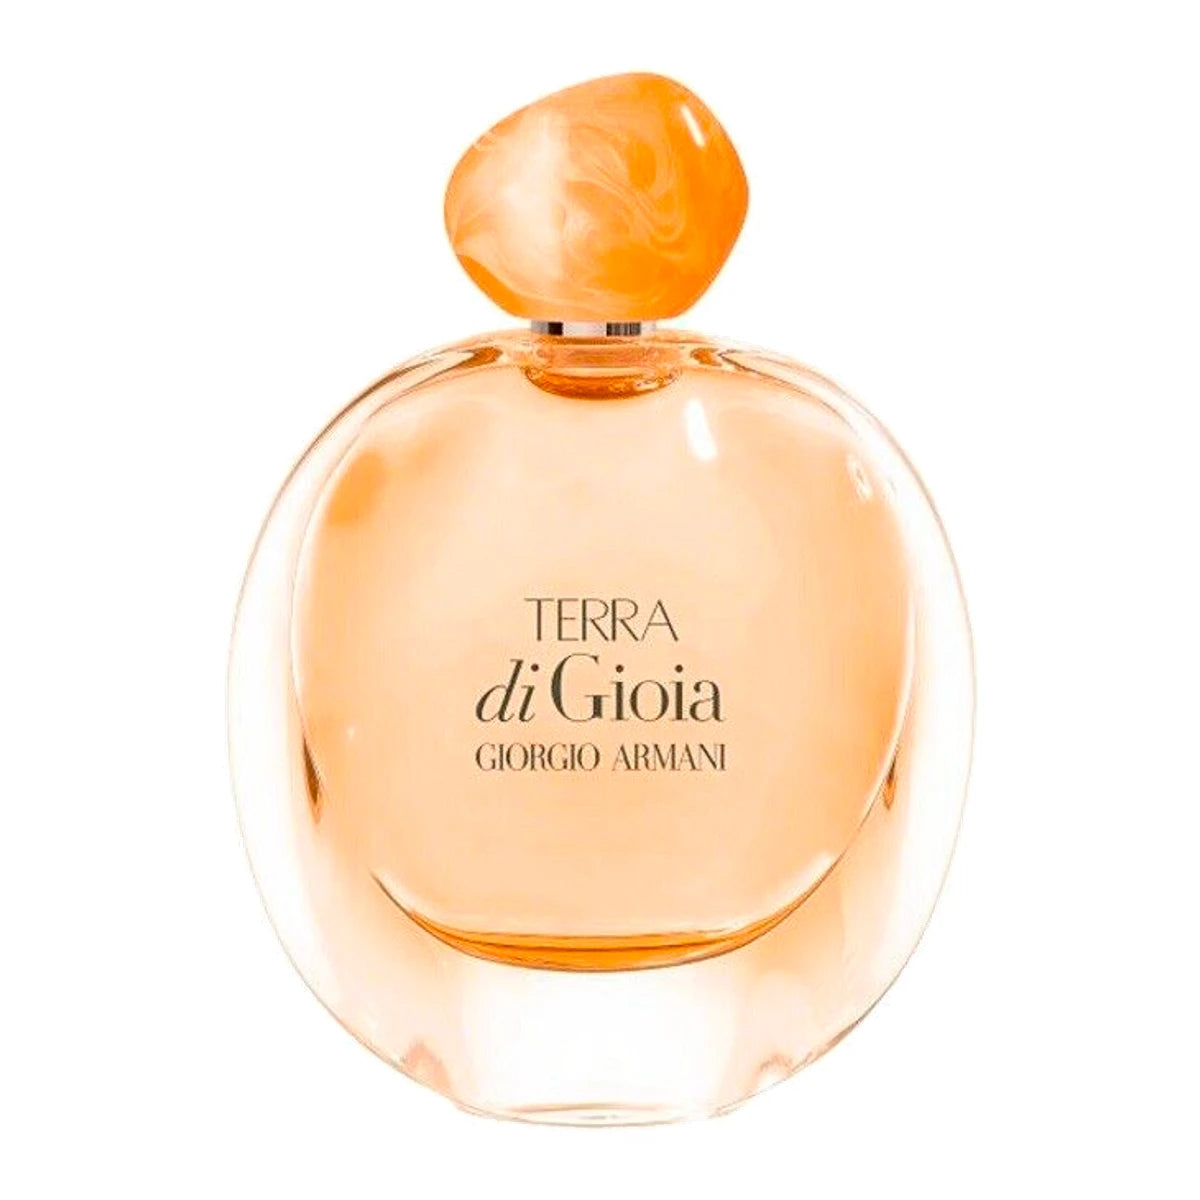 Giorgio Armani Terra di Gioia Eau de Parfum 3.4 oz